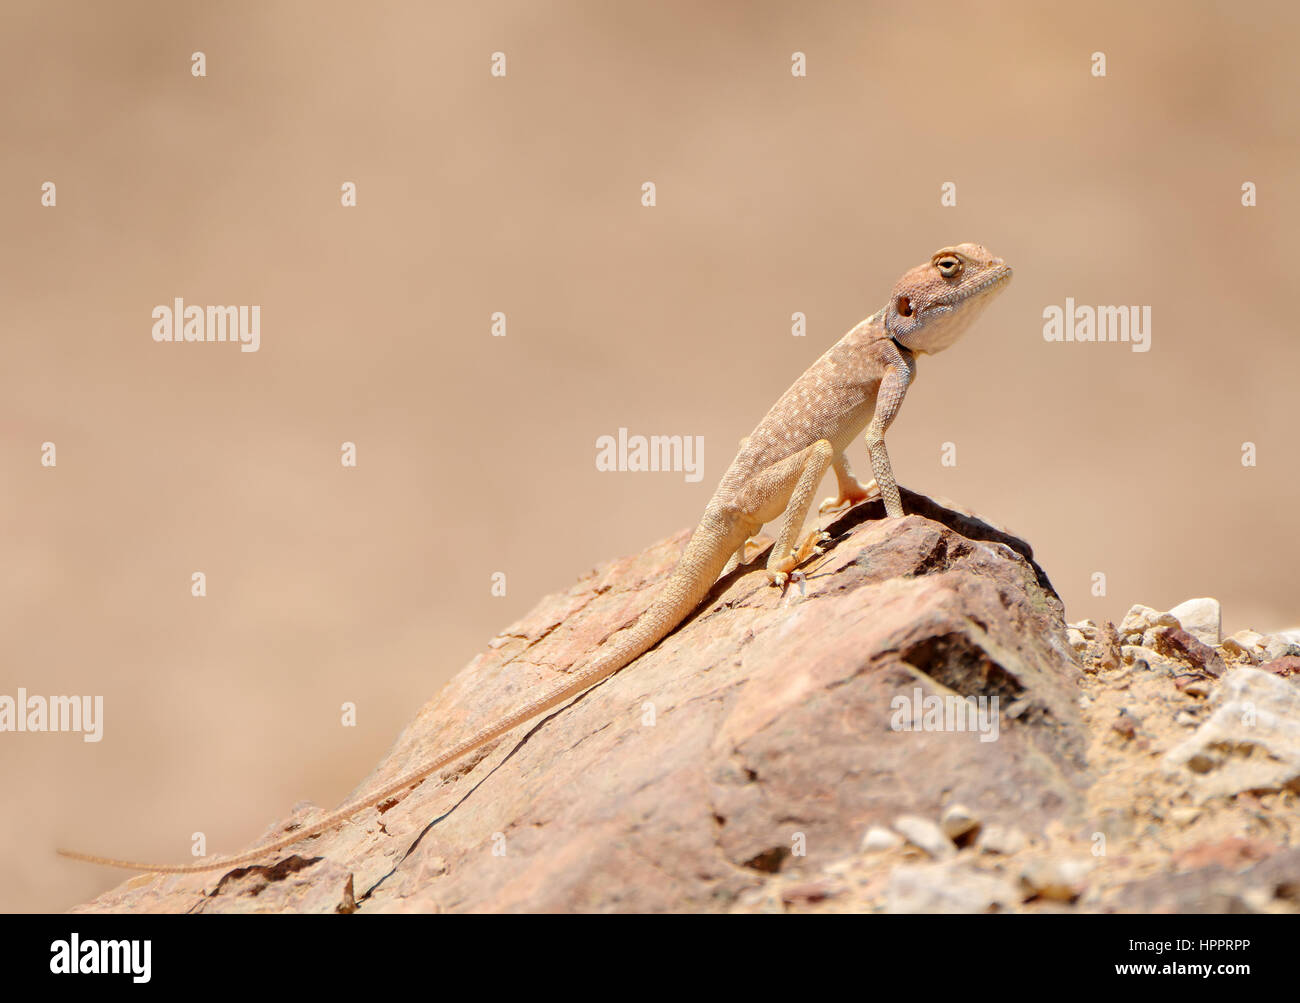 Sinai agama, Pseudotrapelus sinaitus on a rock Stock Photo